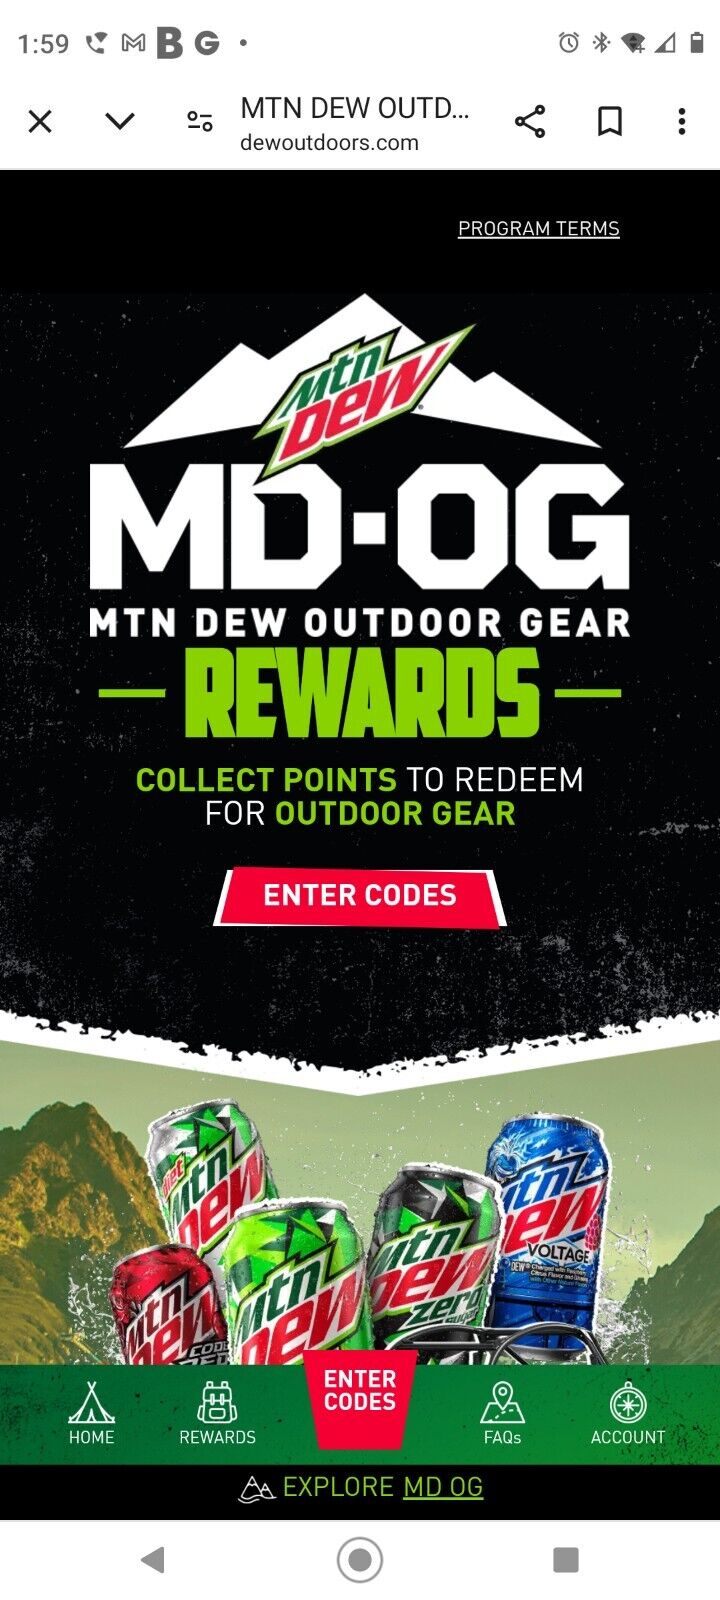 MTN Mountain Dew OG Outdoor Gear Rewards Codes 5000 points